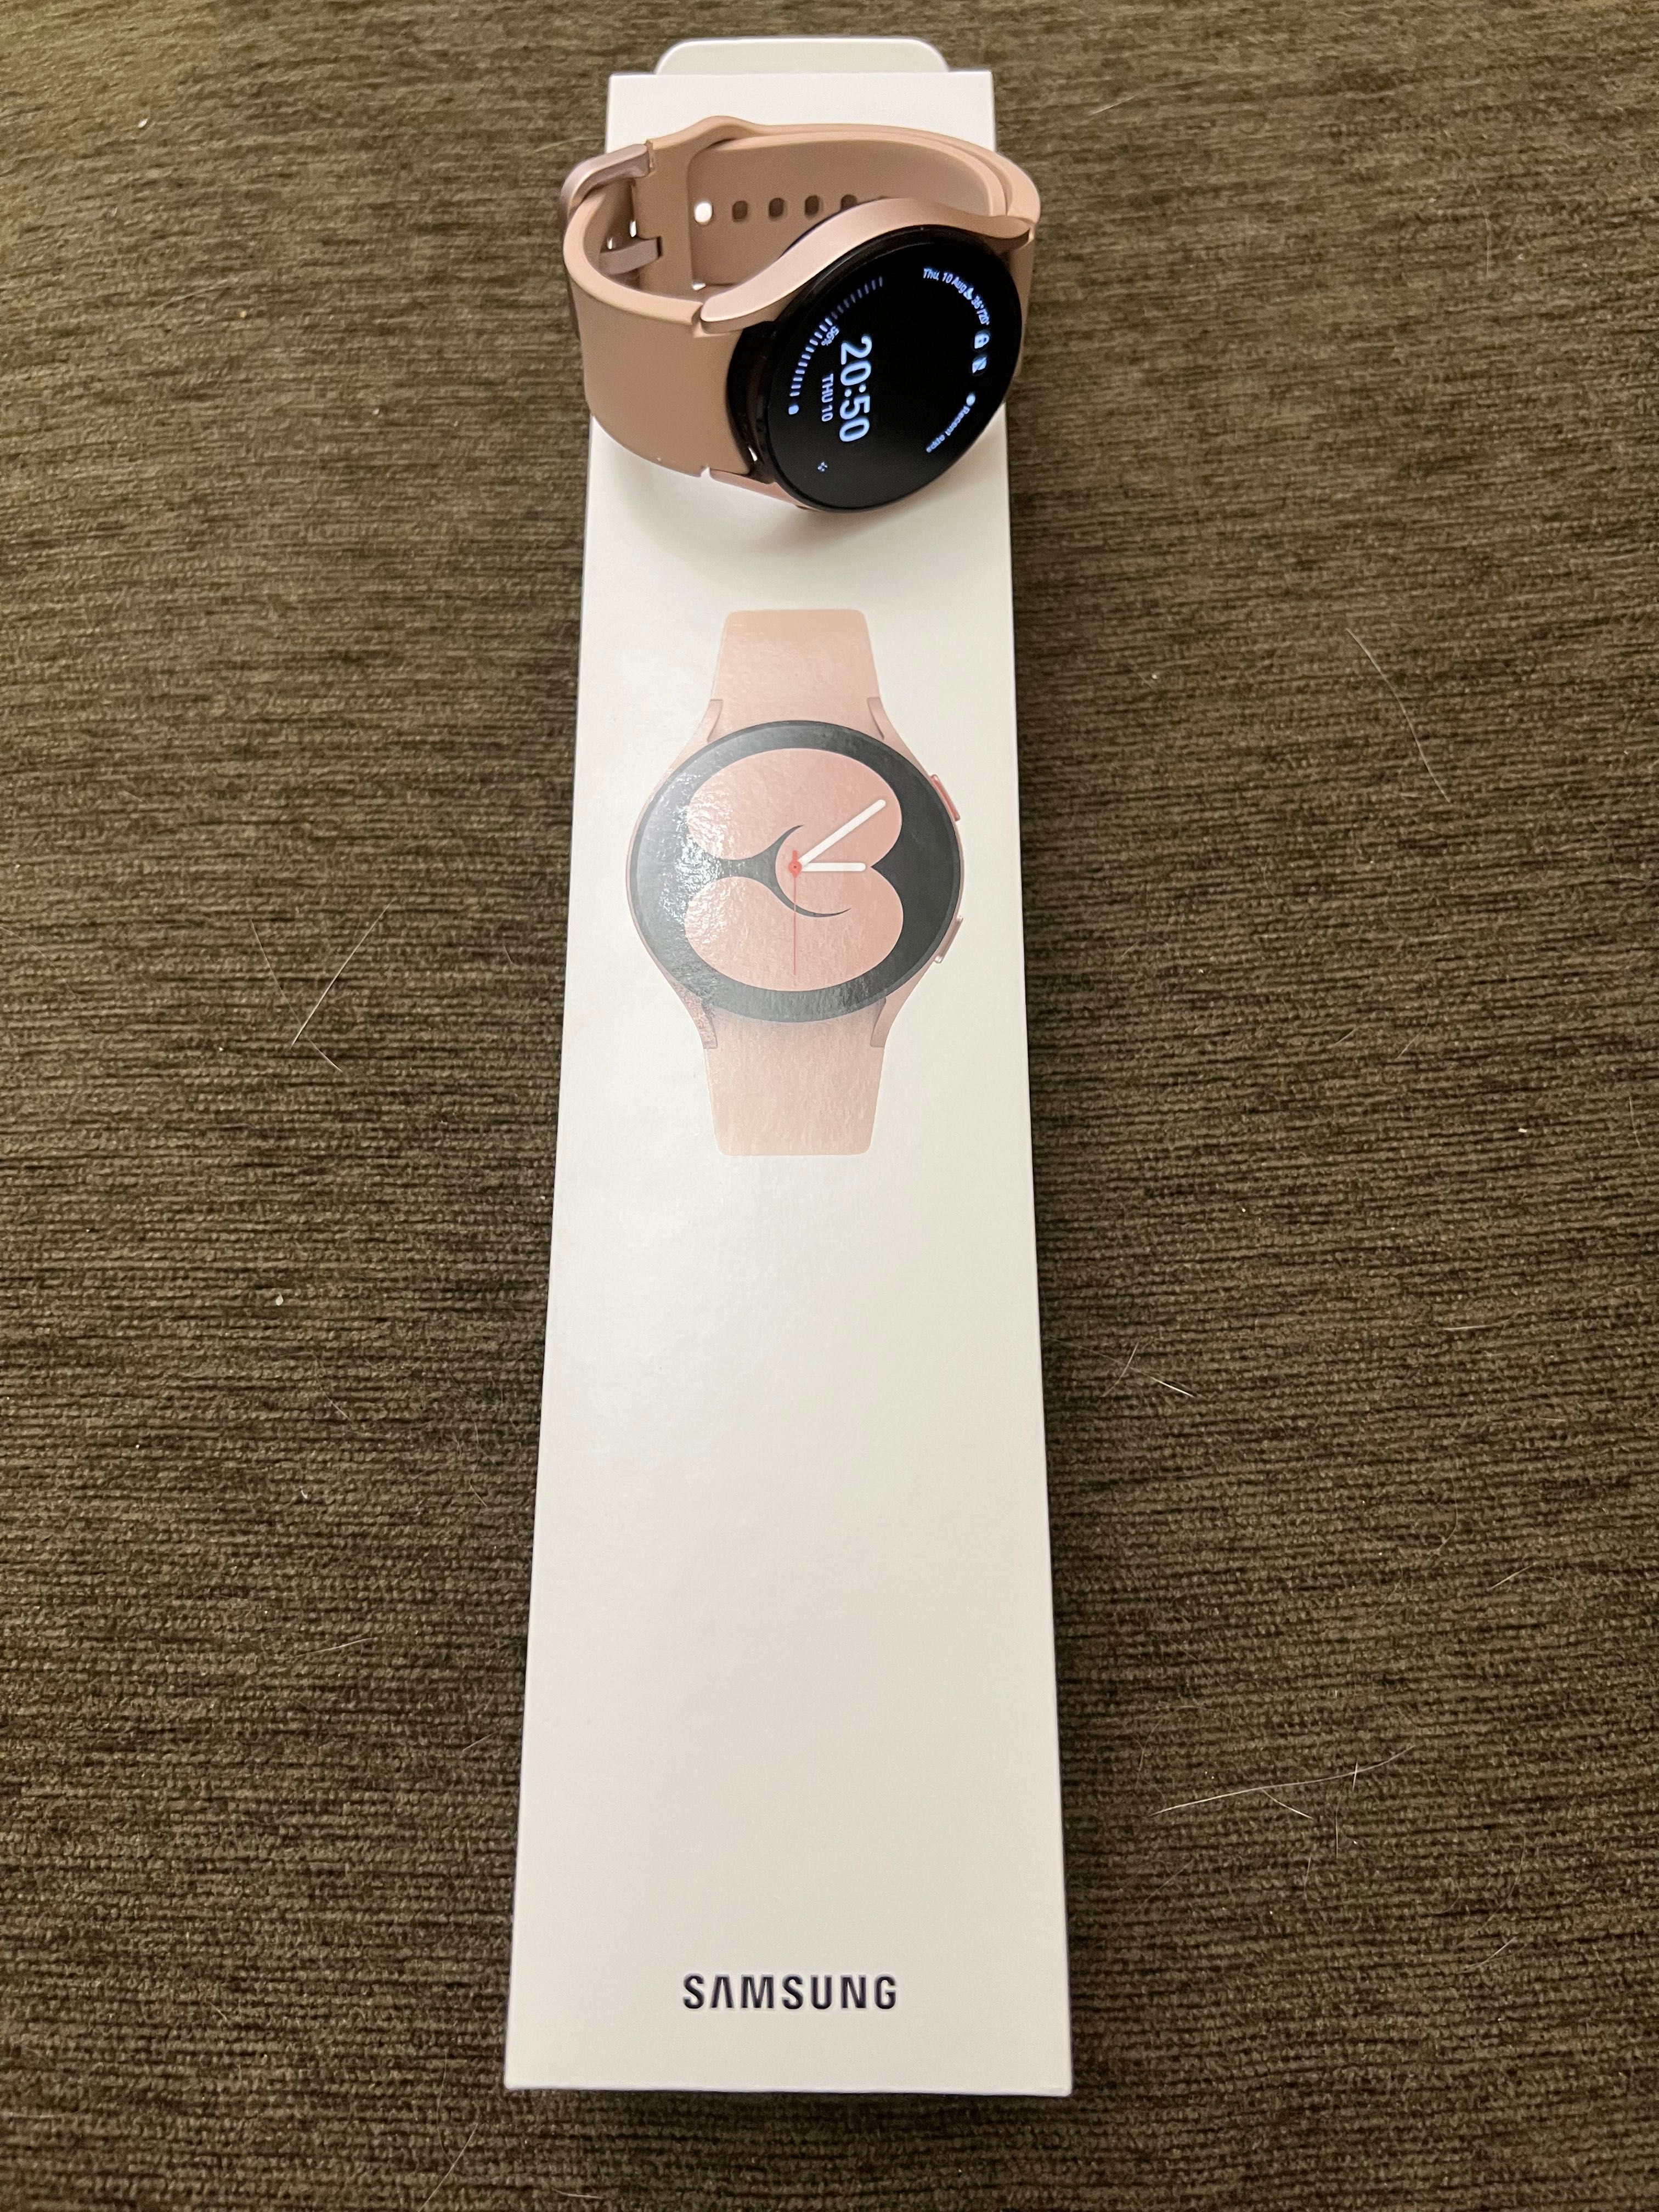 Смарт часы SAMSUNG
Galaxy Watch4
Bluetooth® | Wi-Fi° | GPS 40мм